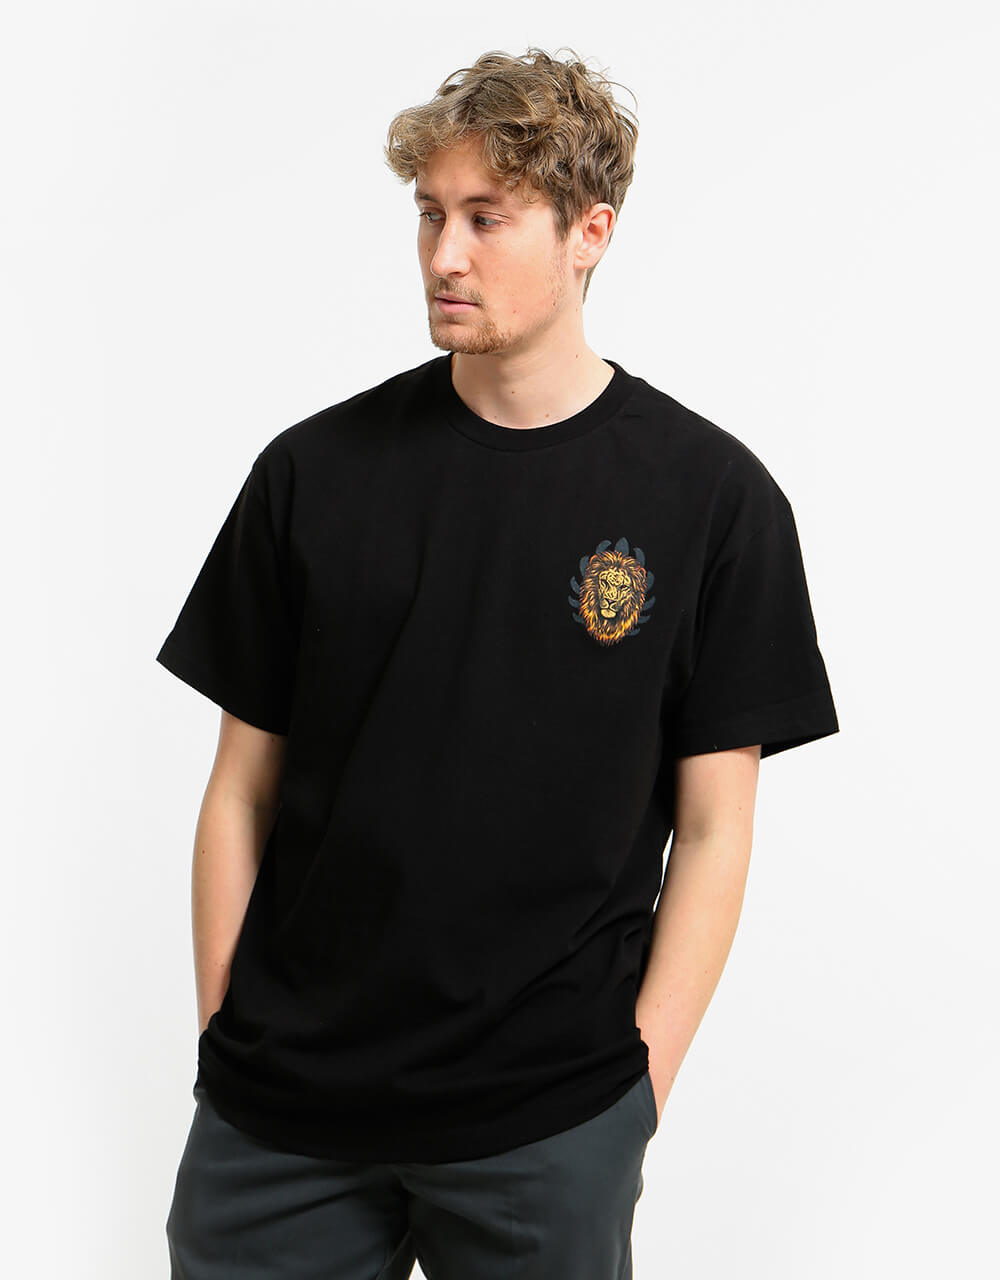 Powell Peralta Salman Agah Lion T-Shirt - Black